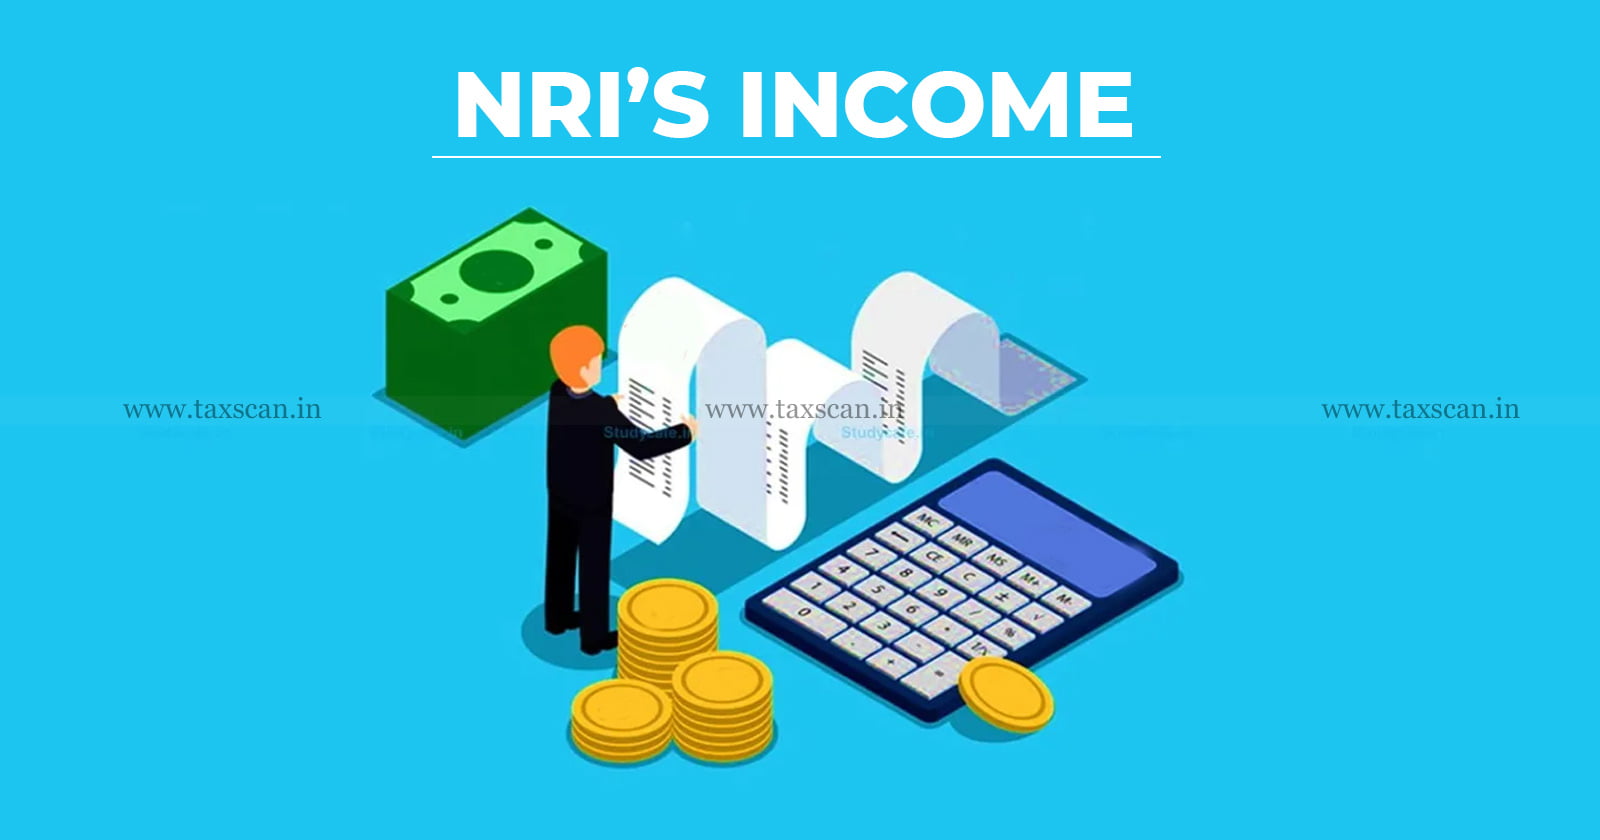 NRI - Income - NRI’s Income - Deposit - Foreign Bank Account - Bank Account - Taxed - Tax - ITAT - Income Tax - taxscan